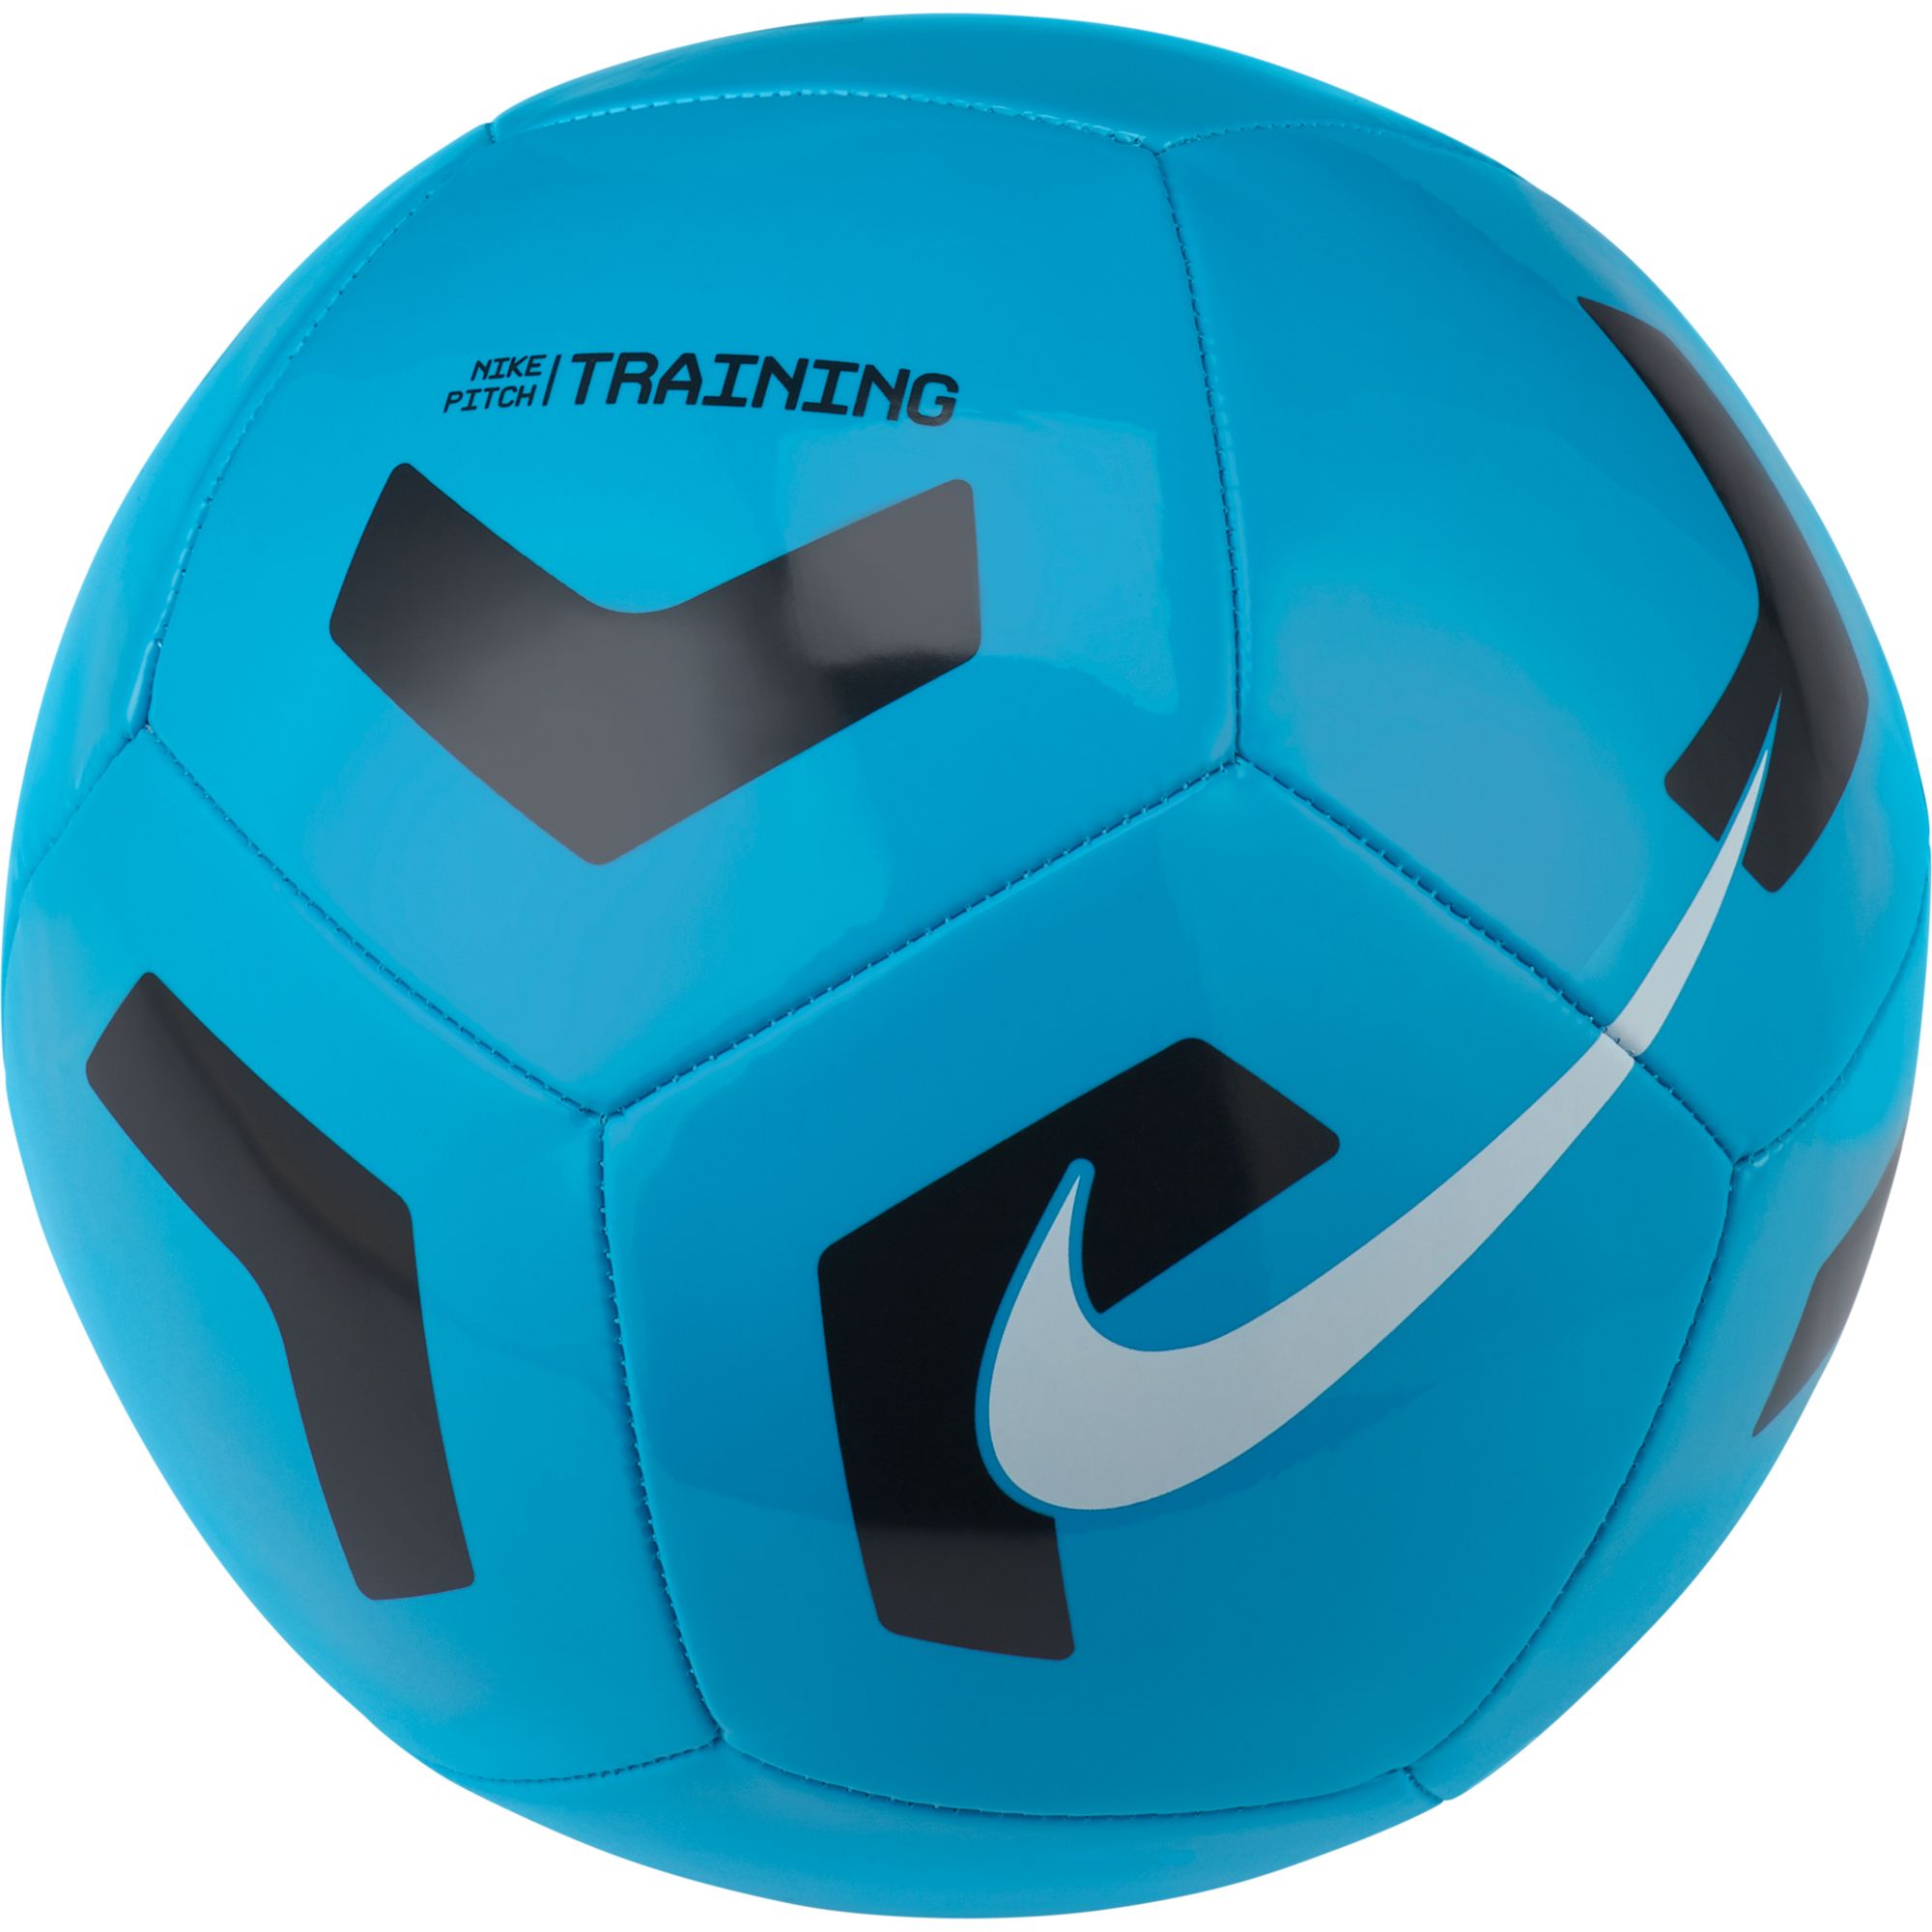 pitch soccer ball